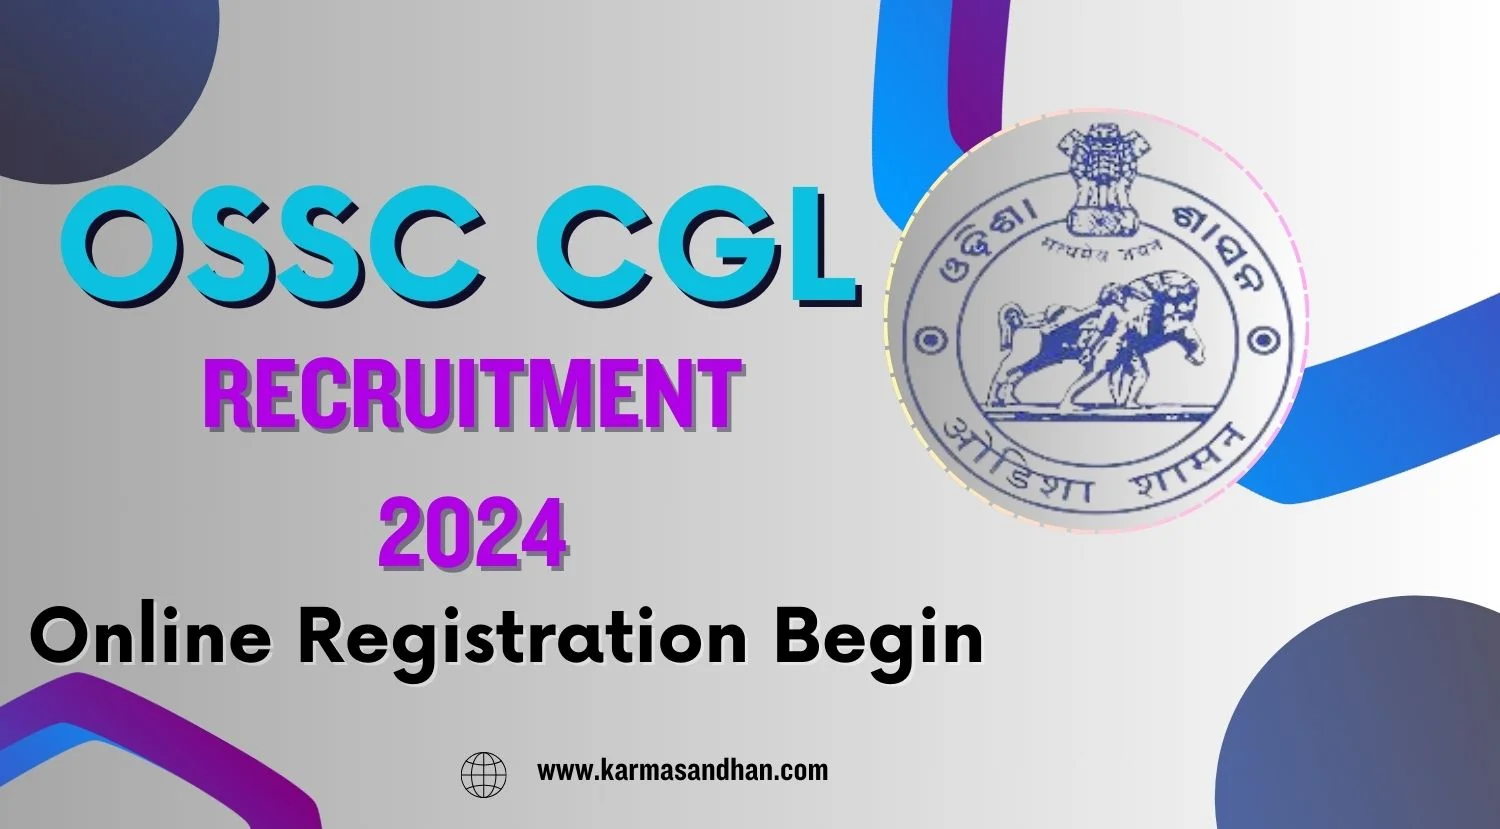 OSSC CGL Recruitment 2024 for 586 Vacancies, Online Registration Begins